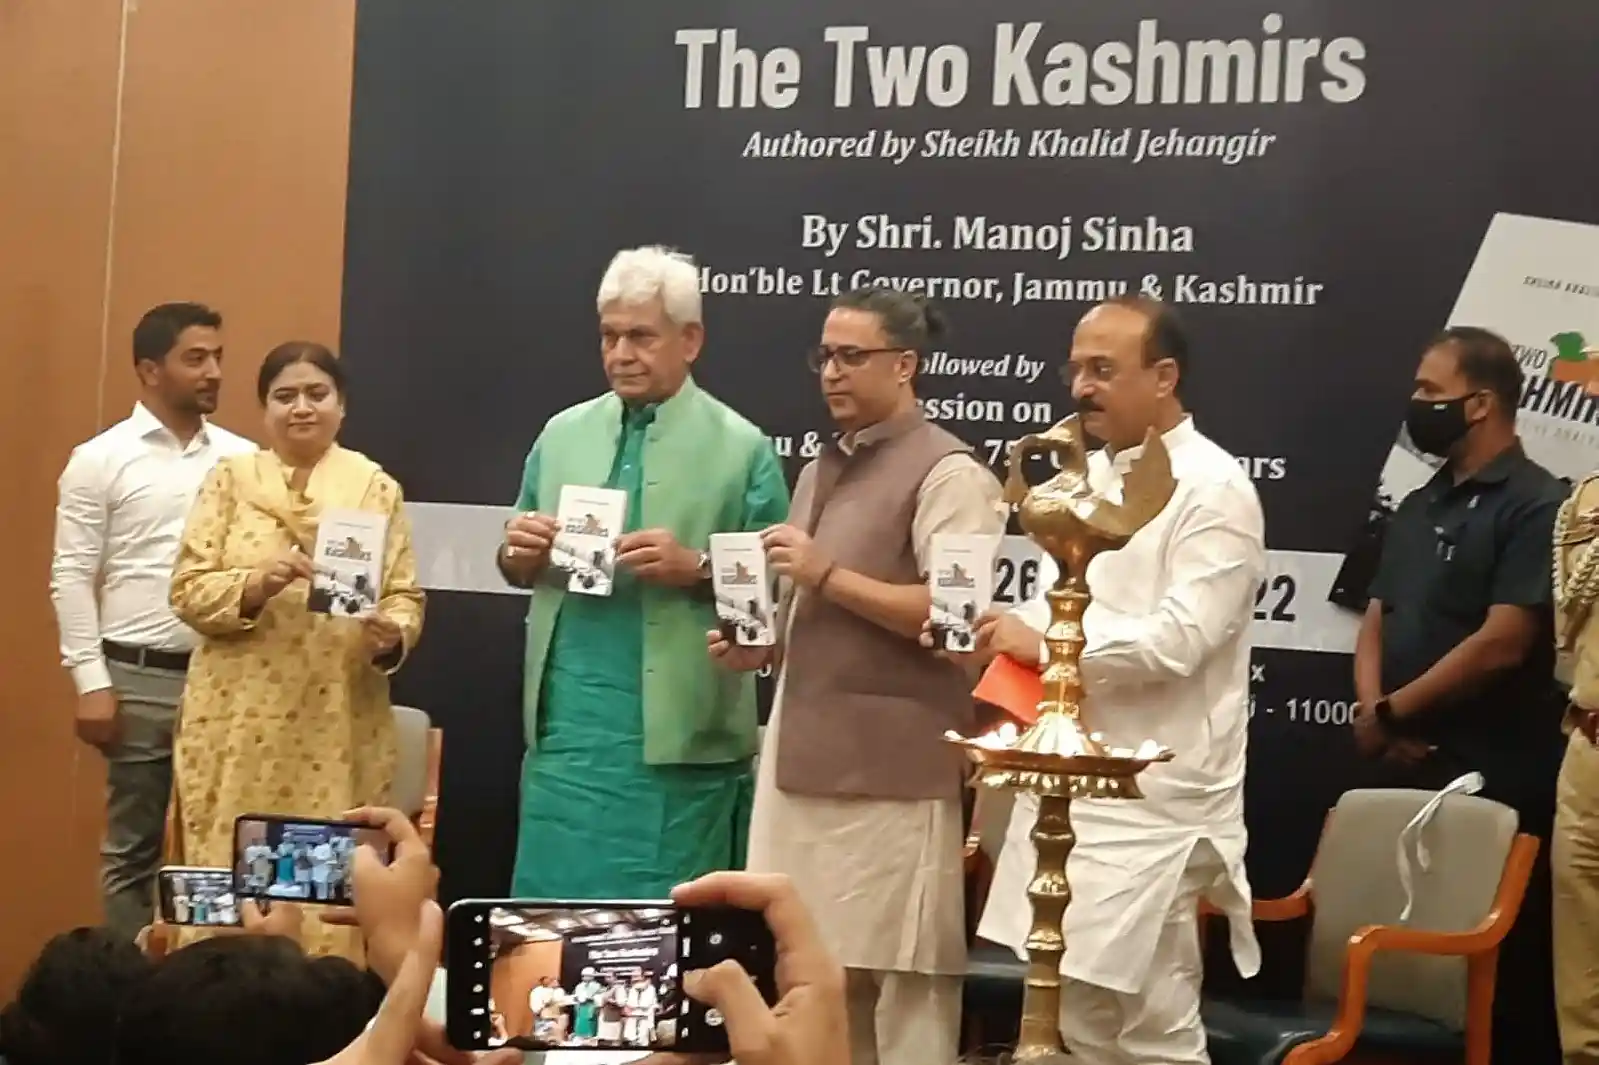 Western media has contributed more to propaganda about Kashmir than Pakistan: LG Manoj Sinha